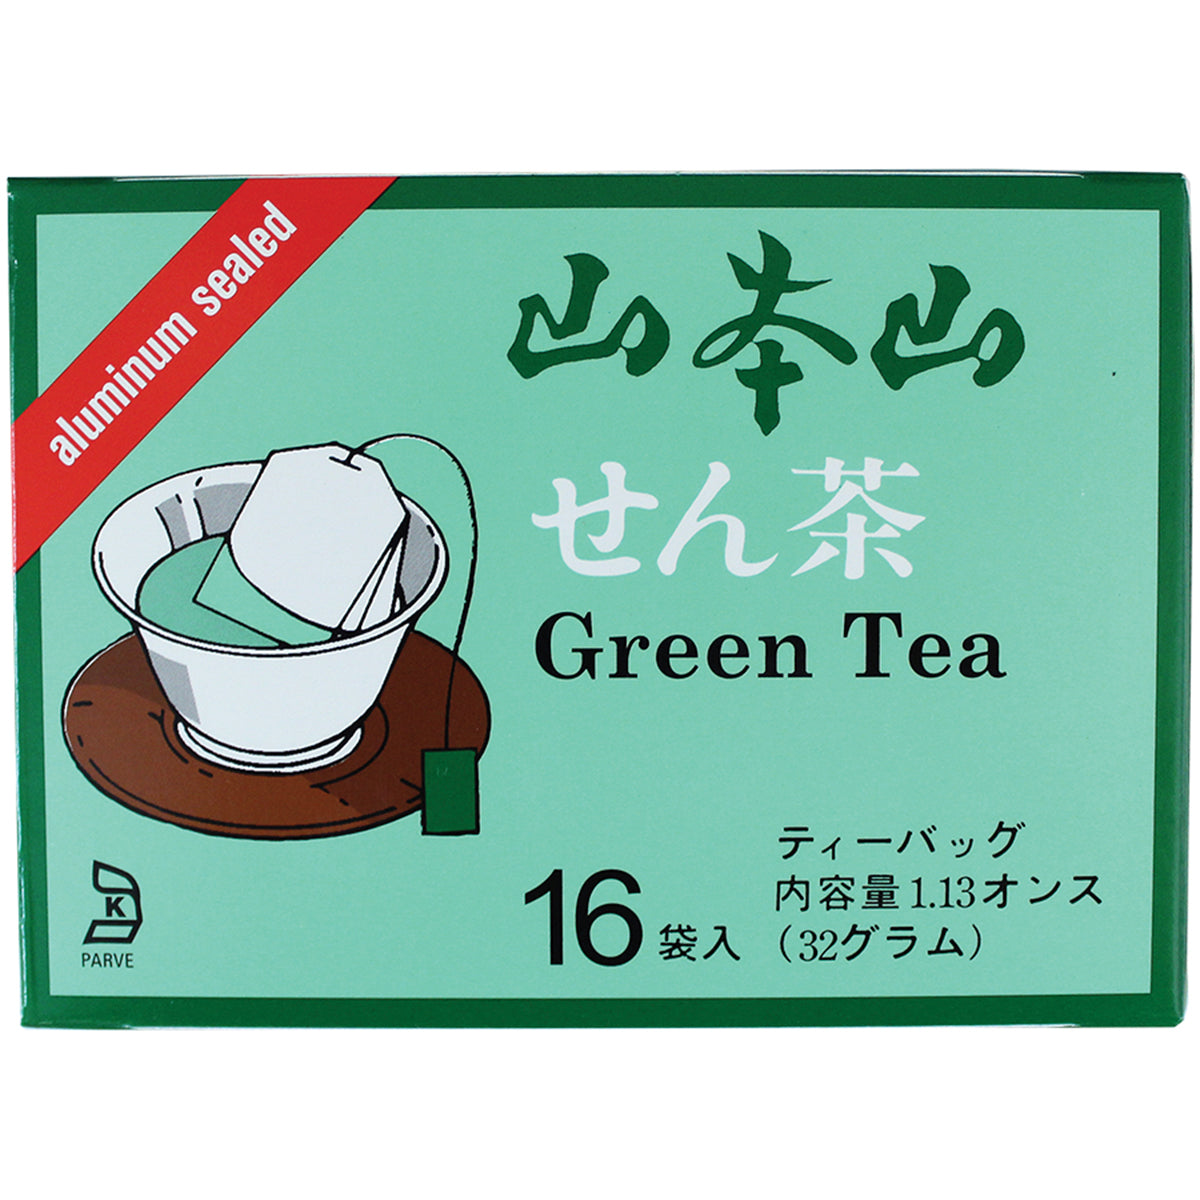 綠茶茶包 - 绿茶茶包 - YMY GREEN TEA